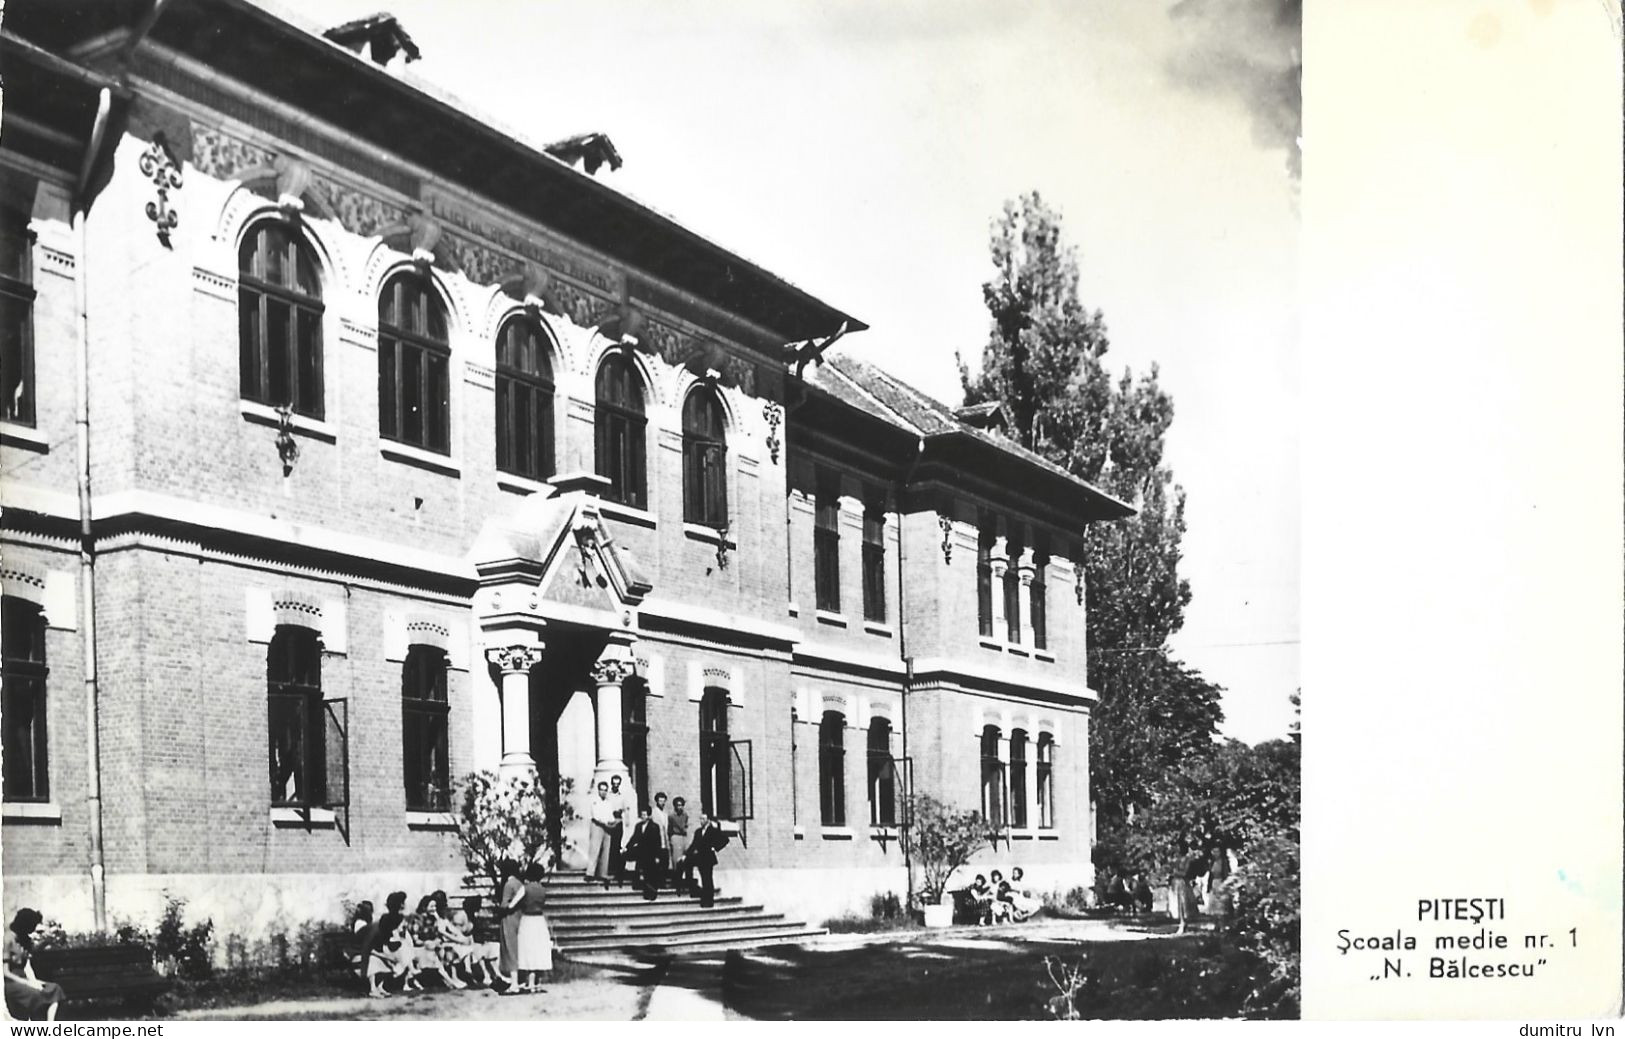 ROMANIA PITESTI - SECONDARY SCHOOL NO. 1 ''N. BALCESCU'', BUILDING, ARCHITECTURE, PEOPLE ON THE BENCH - Portomarken